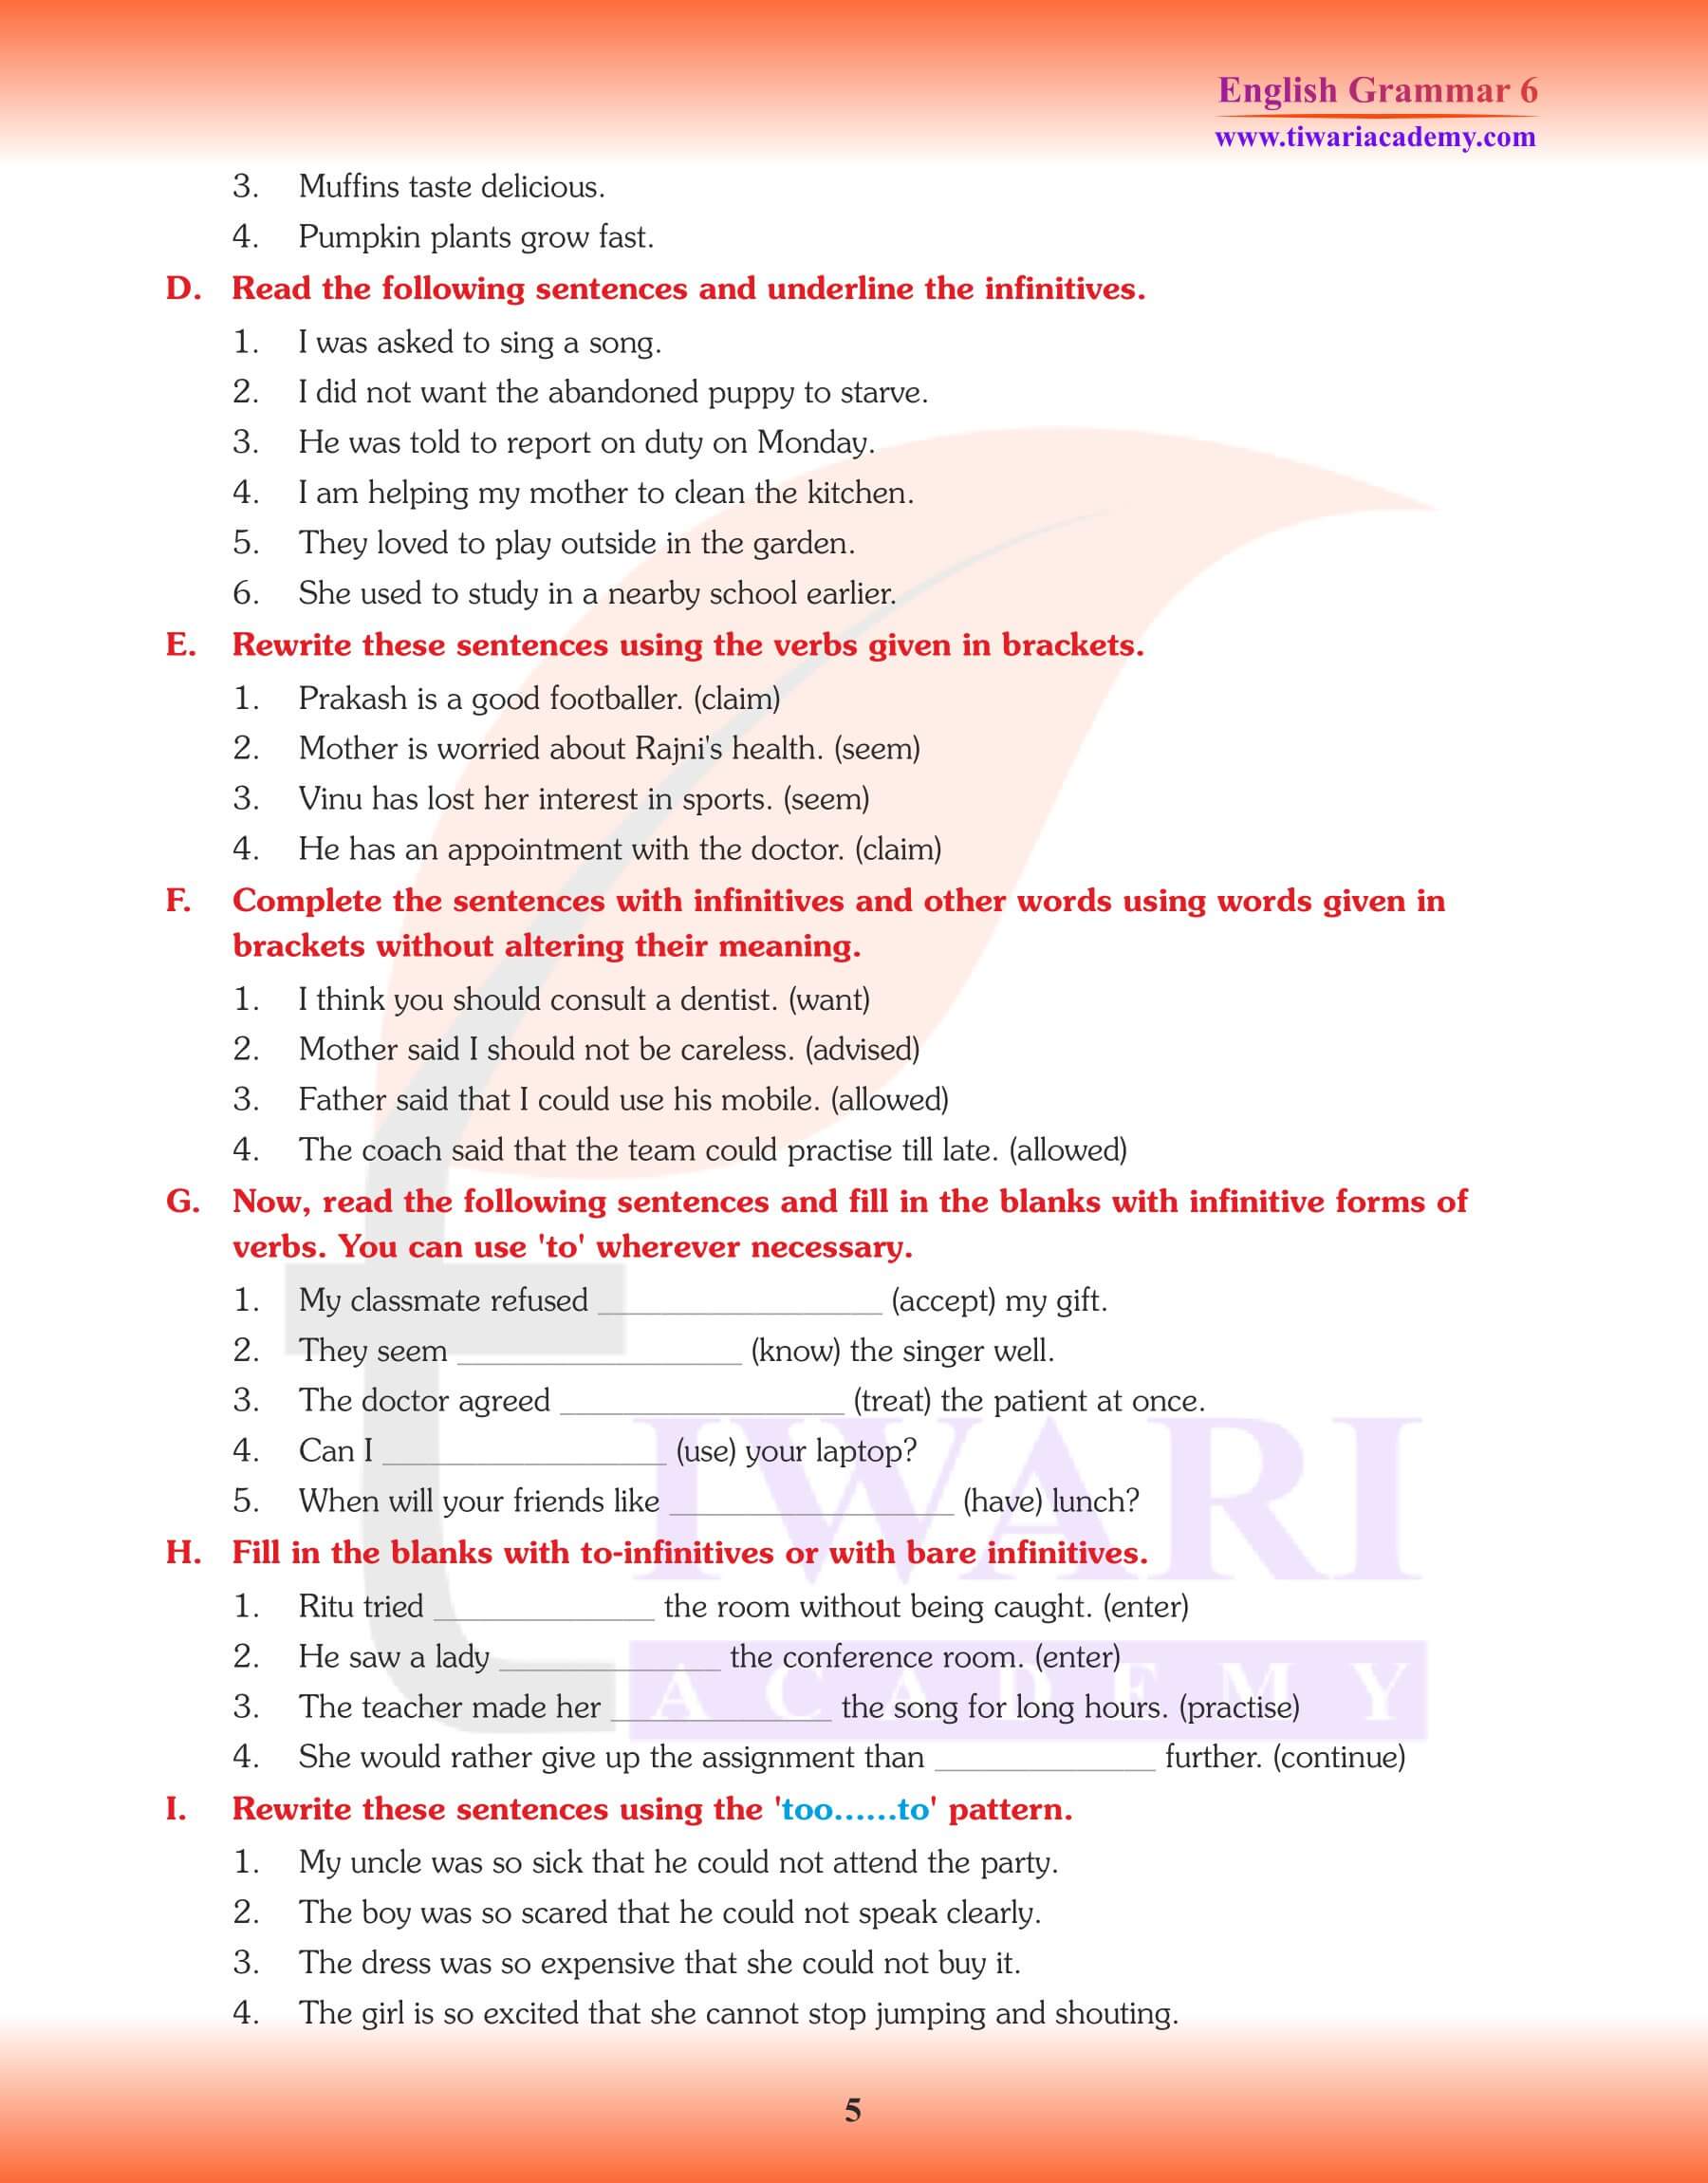 Class 6 English Grammar Non-finite verbs revision book